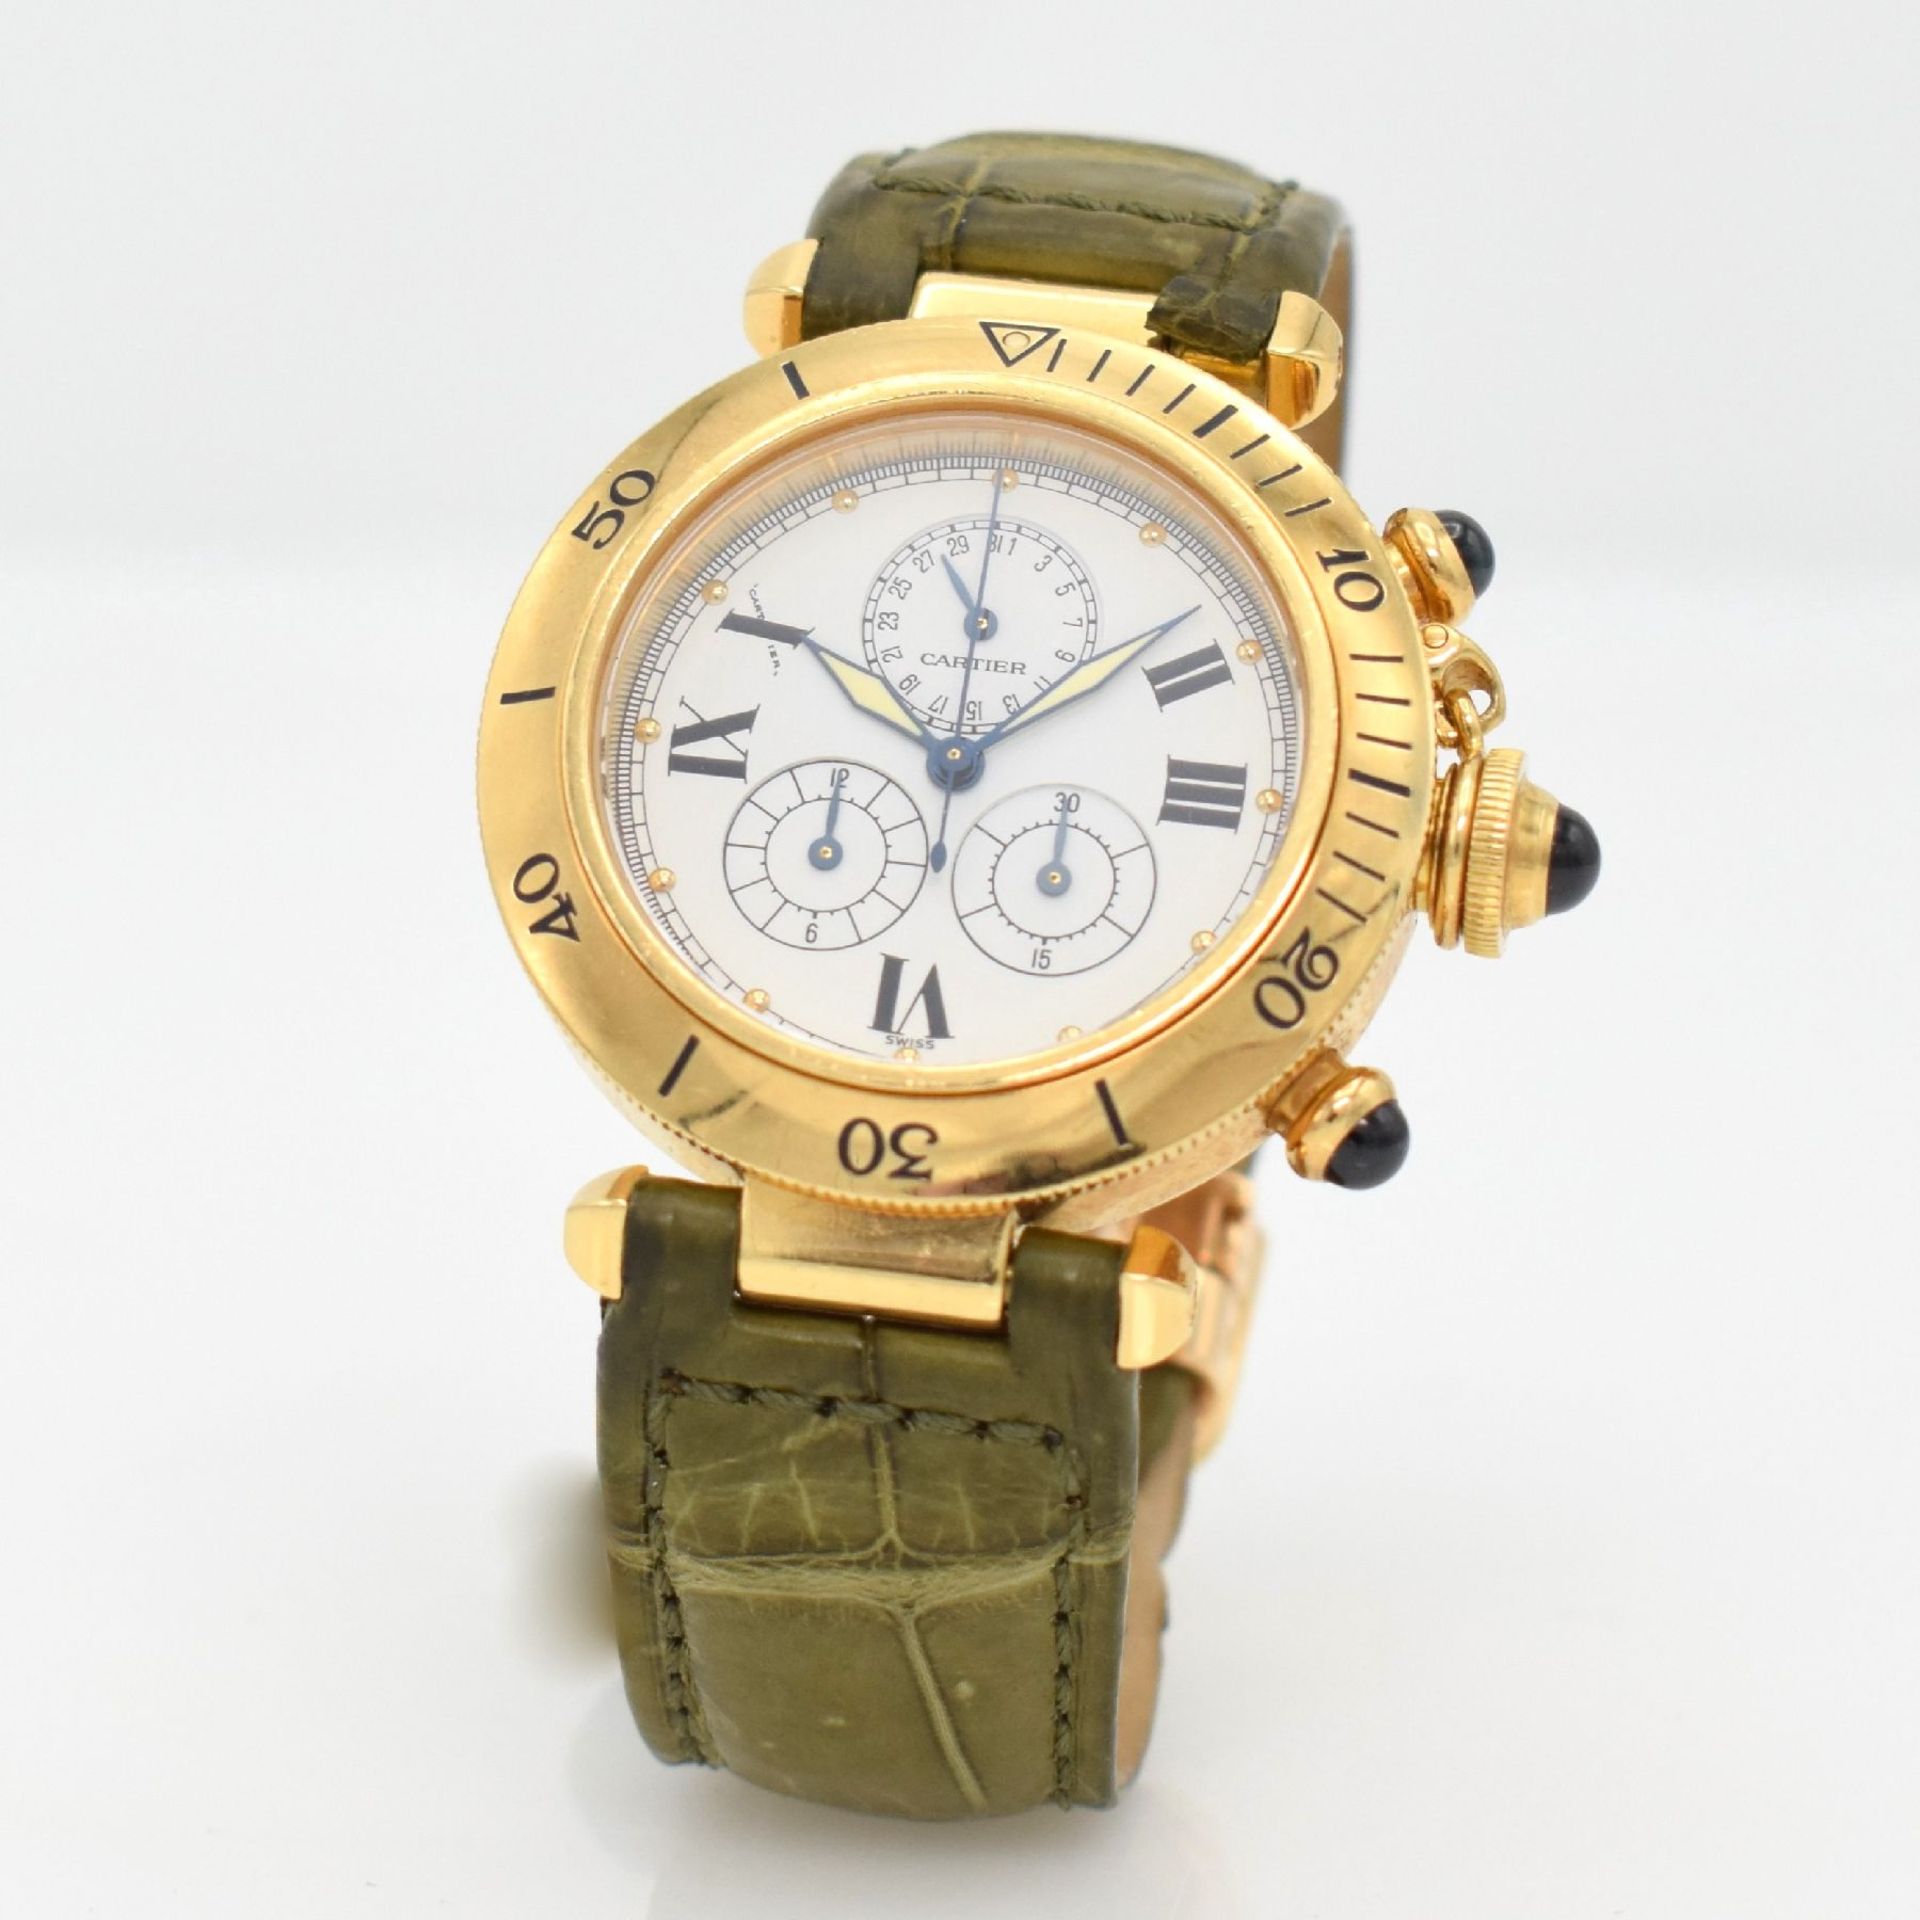 CARTIER Armbandchronograph Serie Pasha in GG 750/000, Schweiz um 2000, Ref. 1353.1, quarz, - Bild 3 aus 9